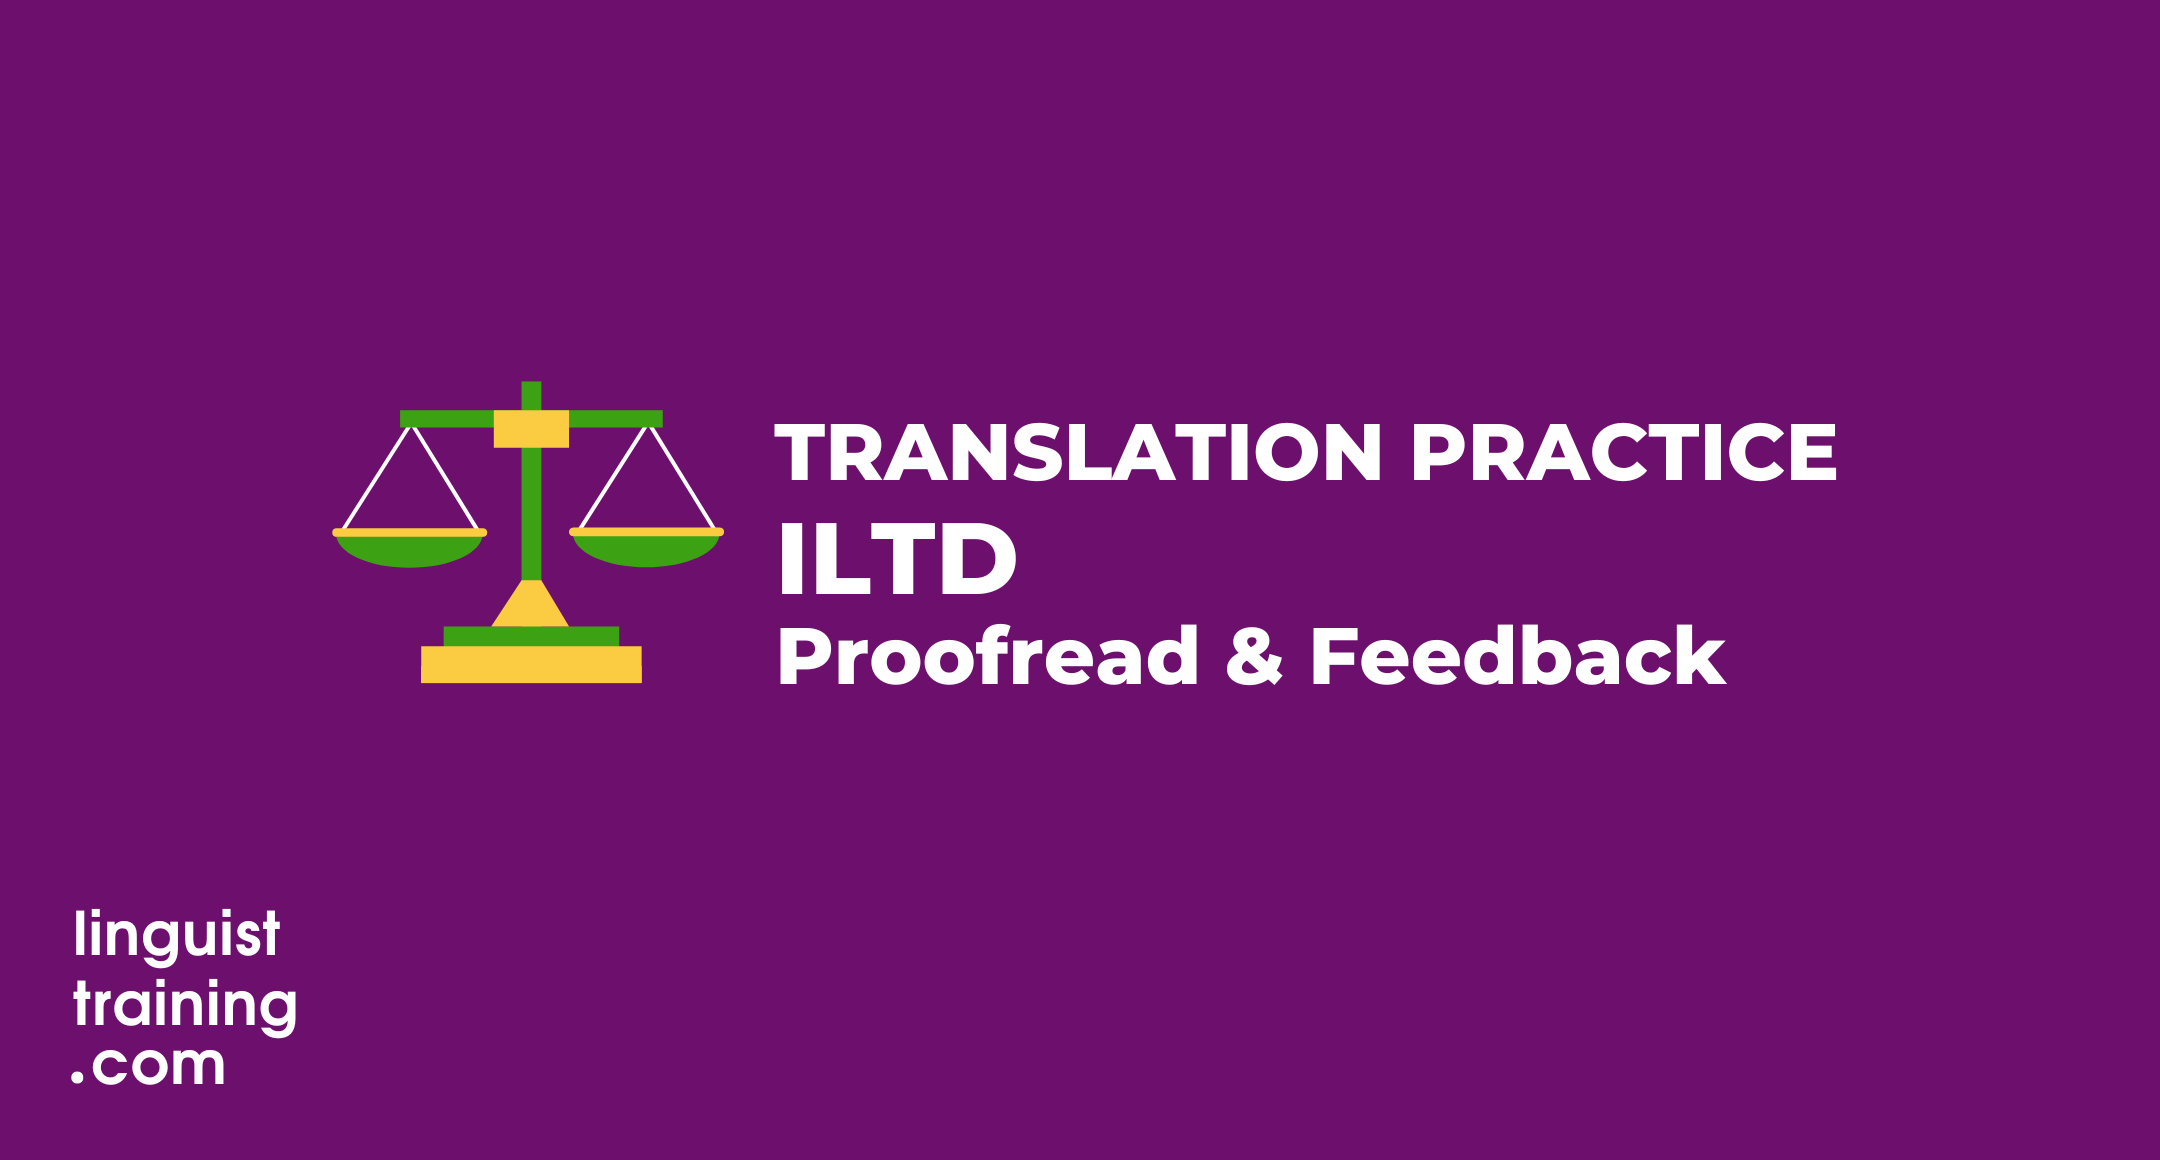 ILTD Translation Practice